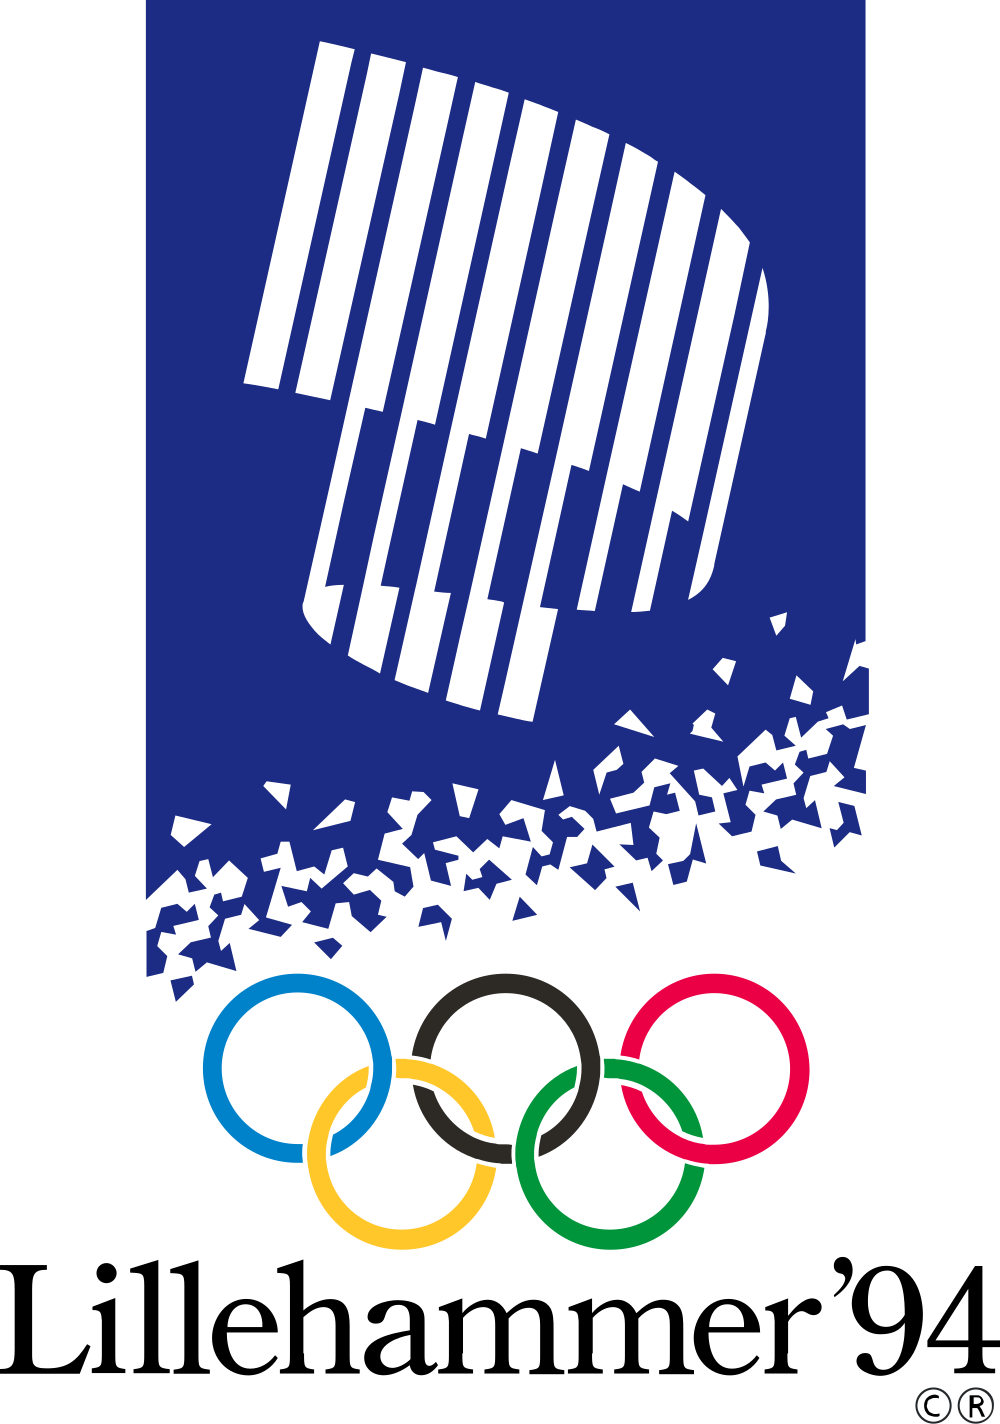 1994 Lillehammer Winter Olympics logo png transparent